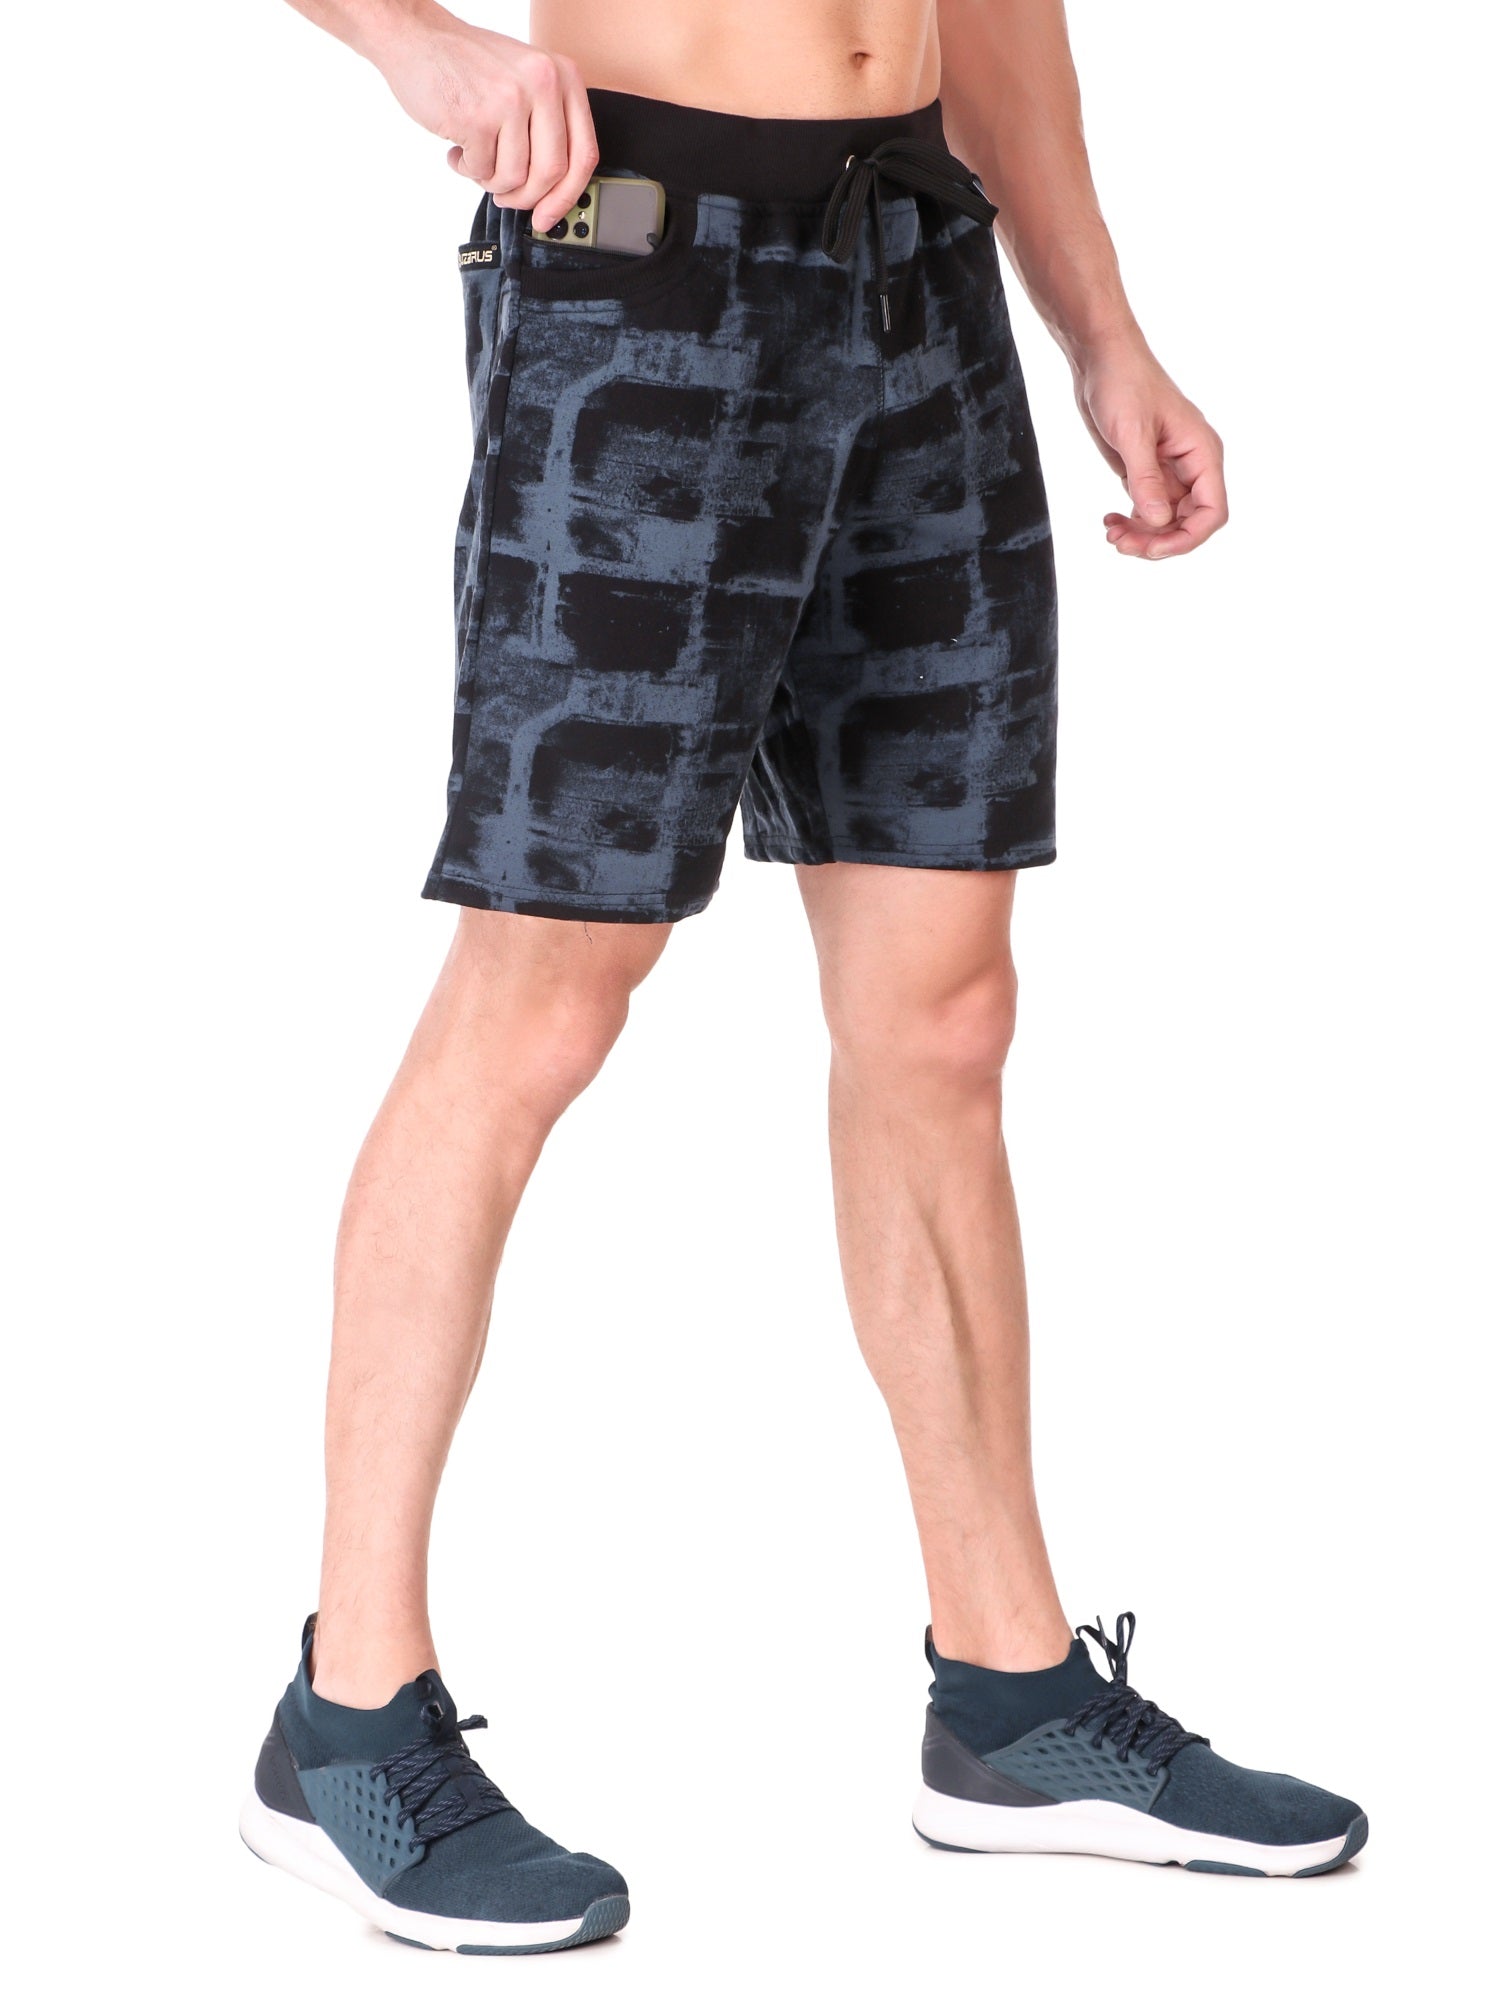 Uzarus Men's Cotton Bermuda Shorts With 2 Zippered Pockets